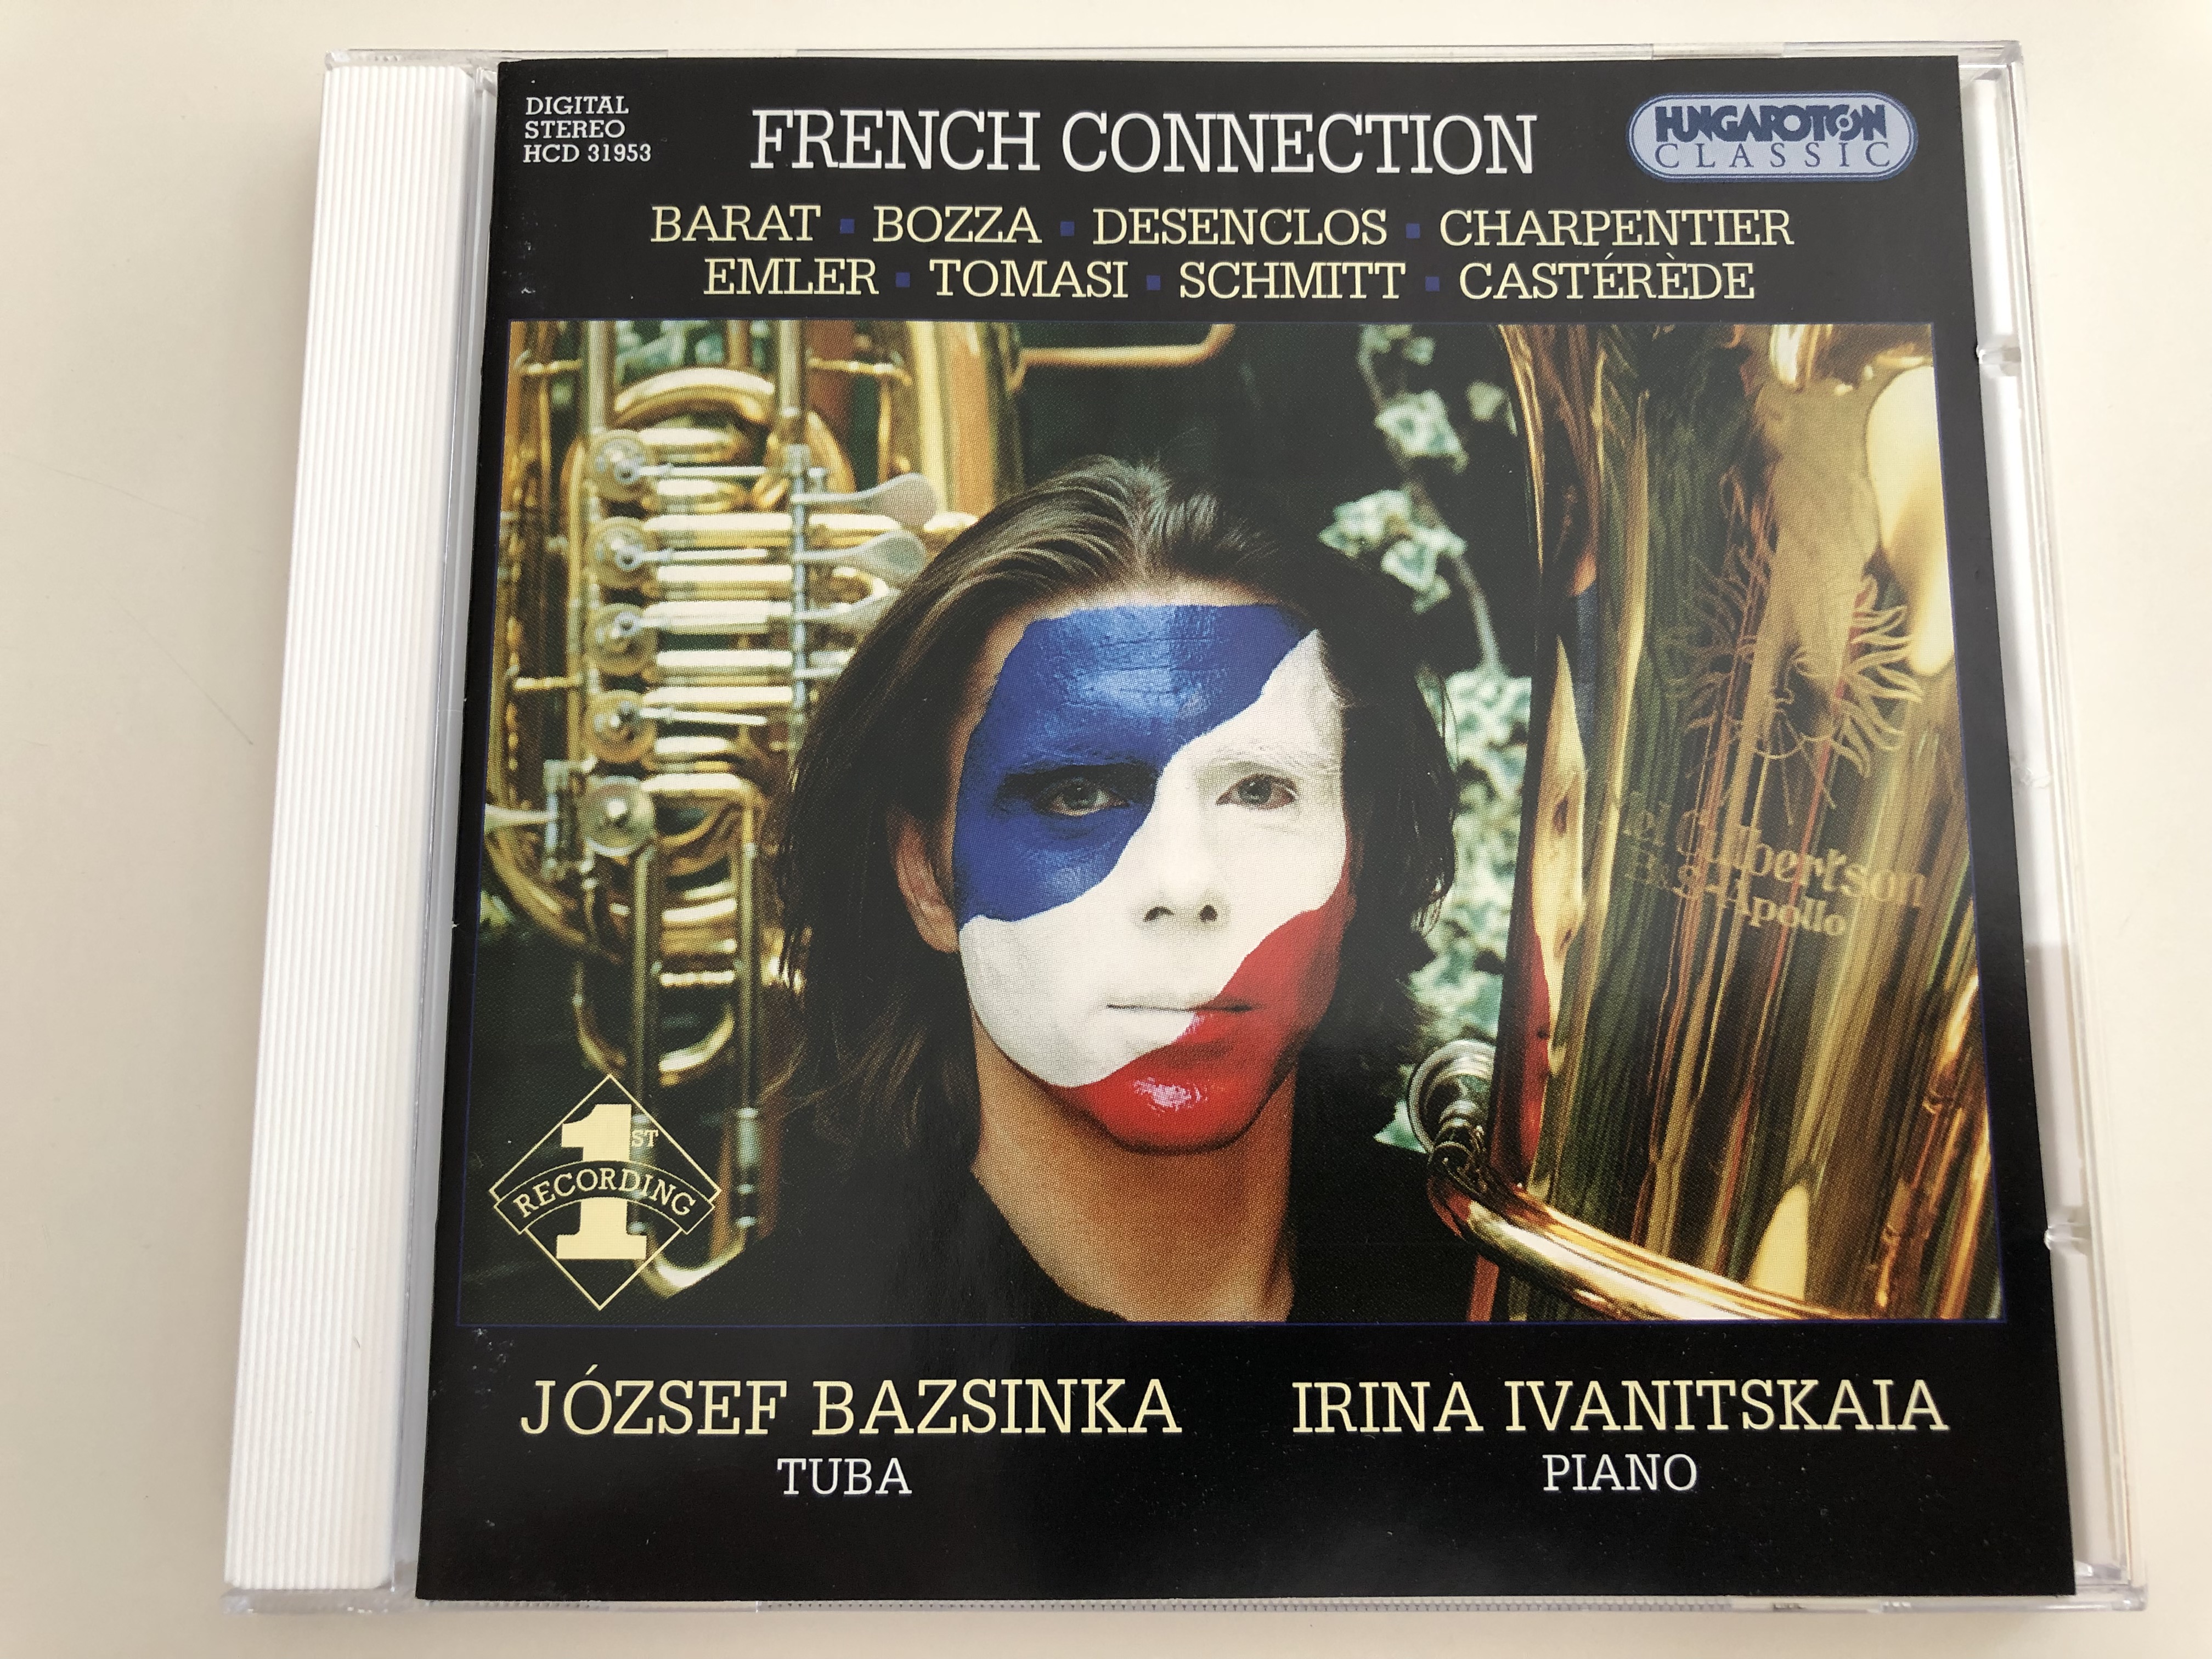 french-connection-barat-bozza-desenclos-charpentier-emler-tomasi-schmitt-cast-r-de-j-zsef-bazsinka-tuba-irina-ivanitskaia-piano-hungaroton-classic-audio-cd-2001-hcd-31953-1-.jpg